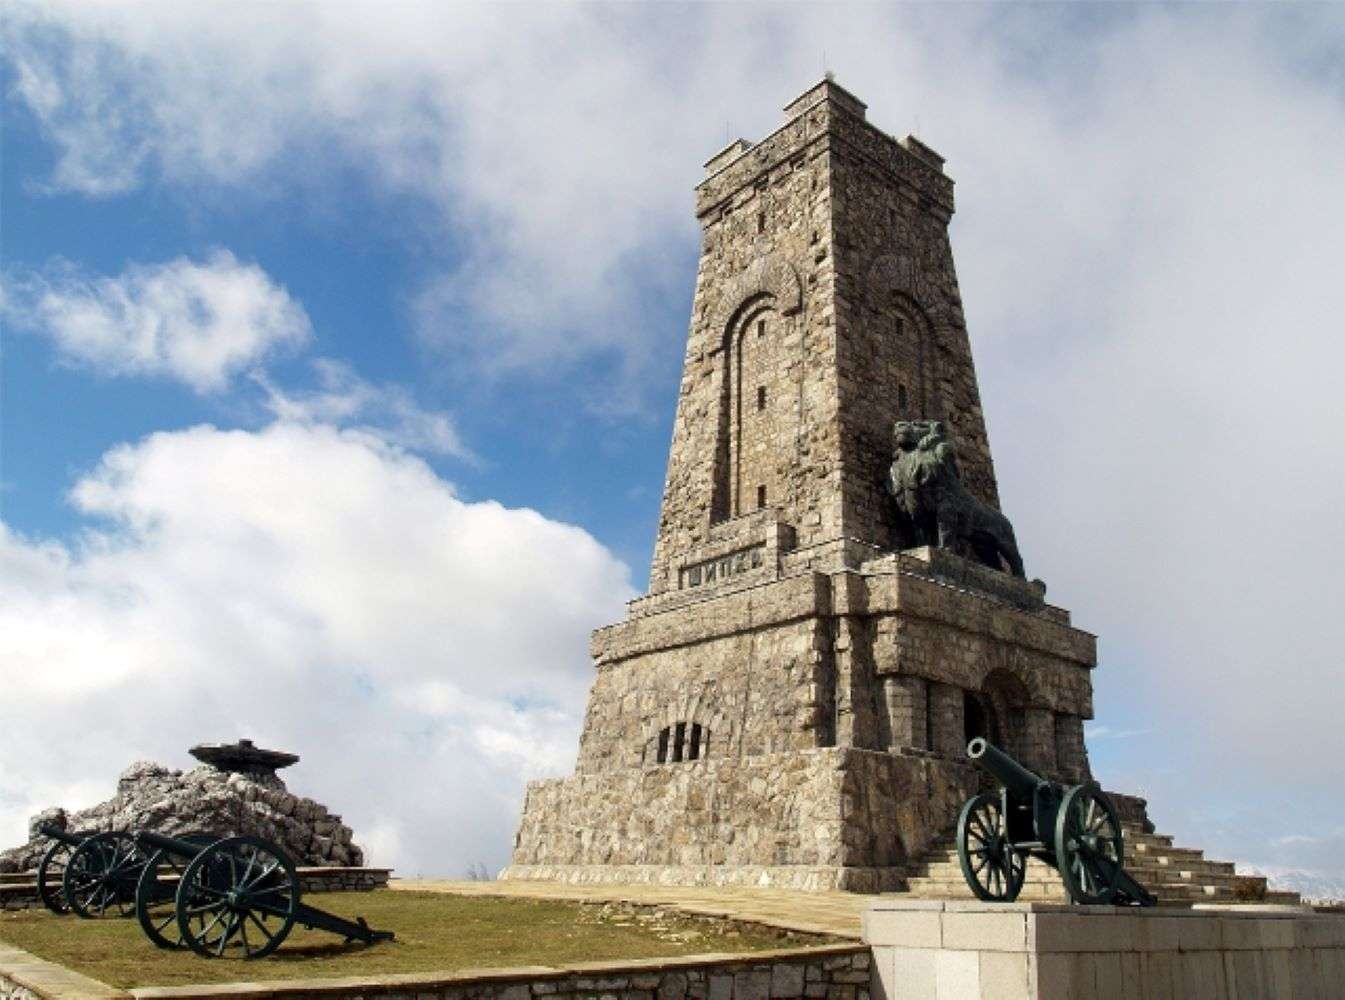 Shipka's monument legpuzzel online